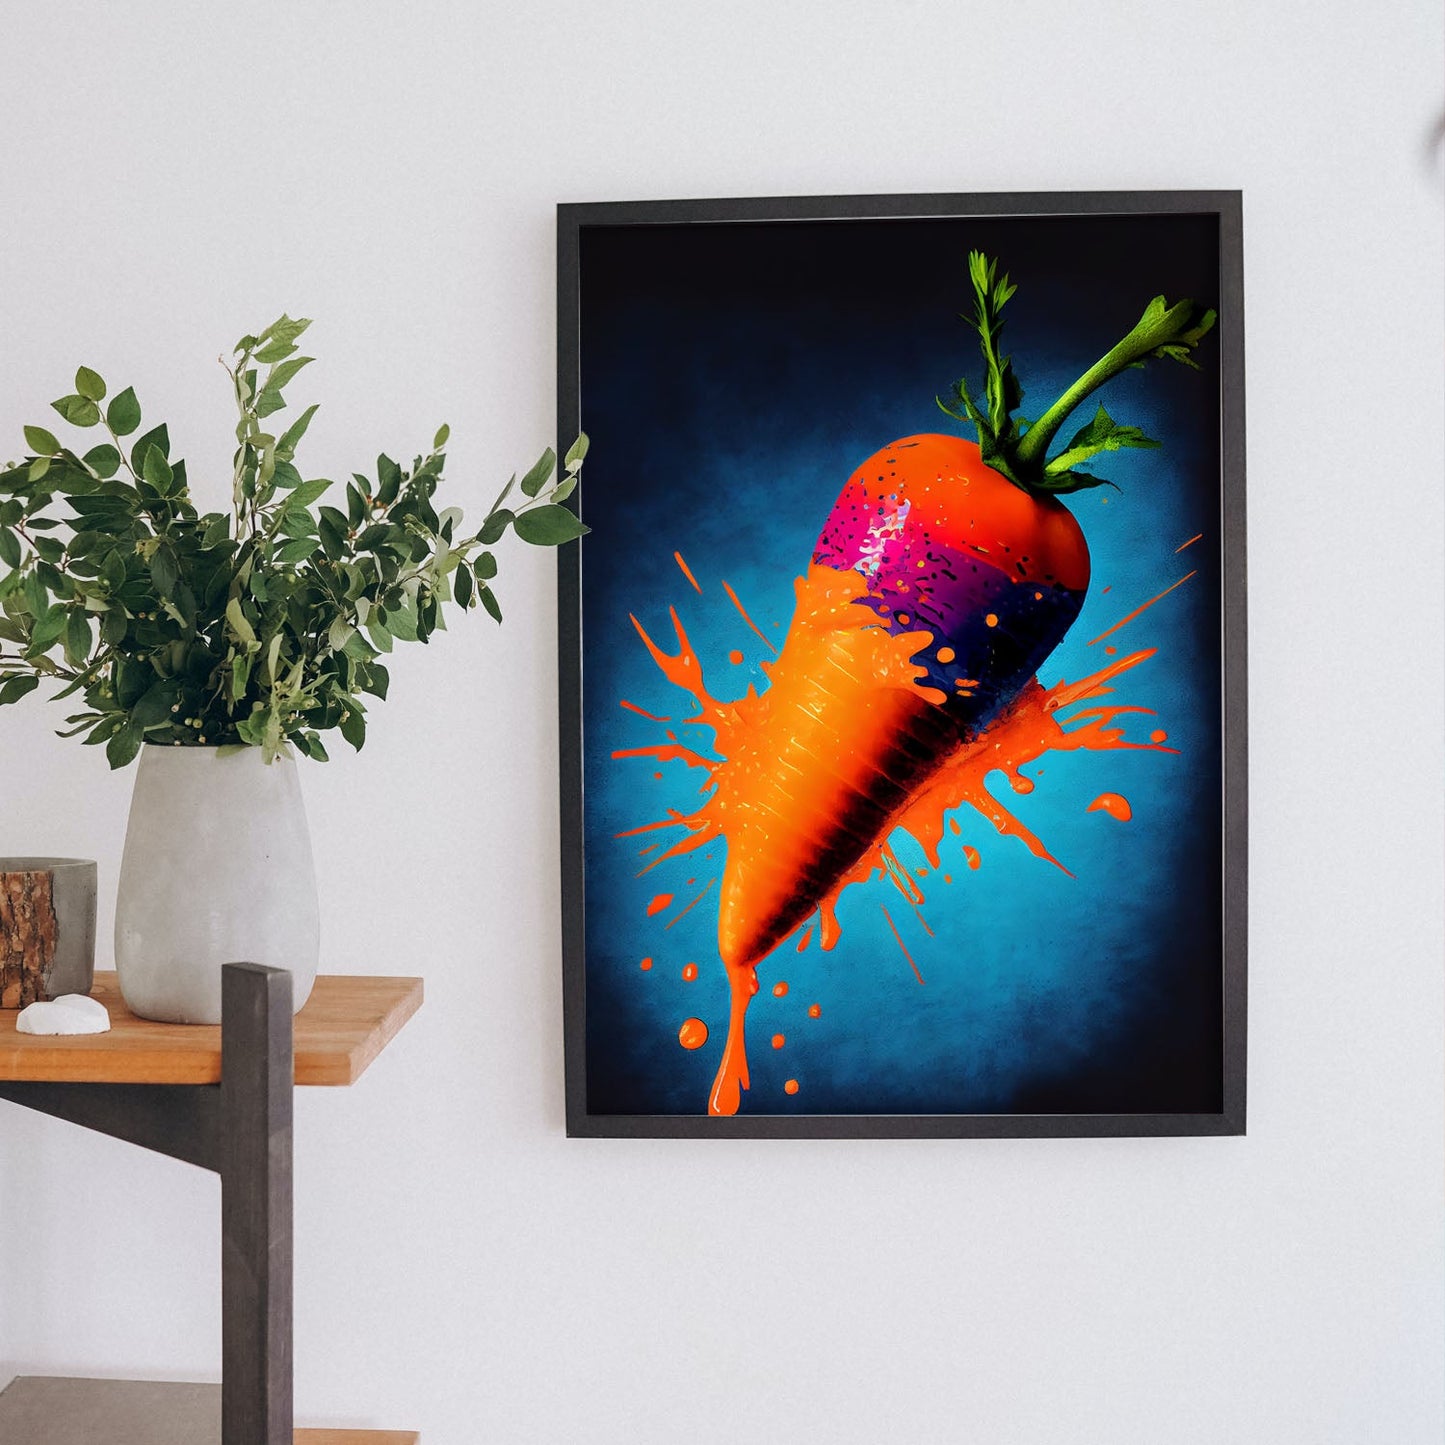 Nacnic Carrot Pop Art. Aesthetic Wall Art Prints for Bedroom or Living Room Design.